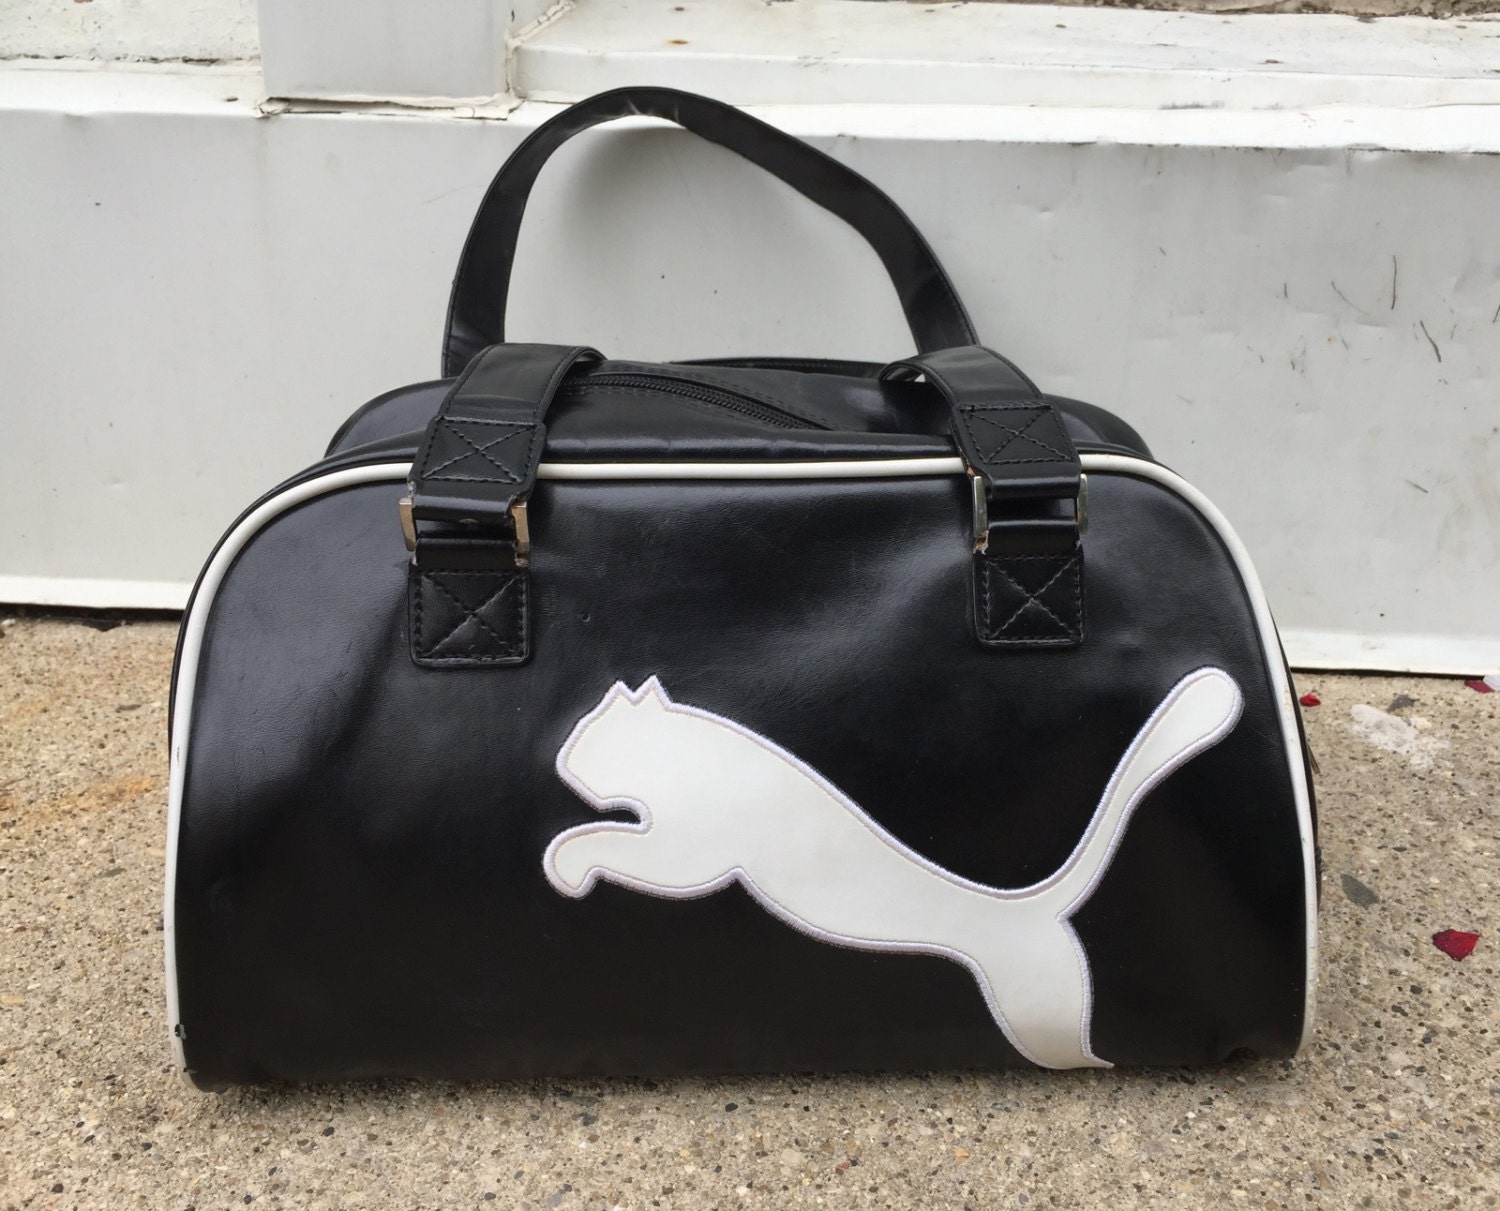 Puma Black and White Faux Leather Handbag Purse Meow